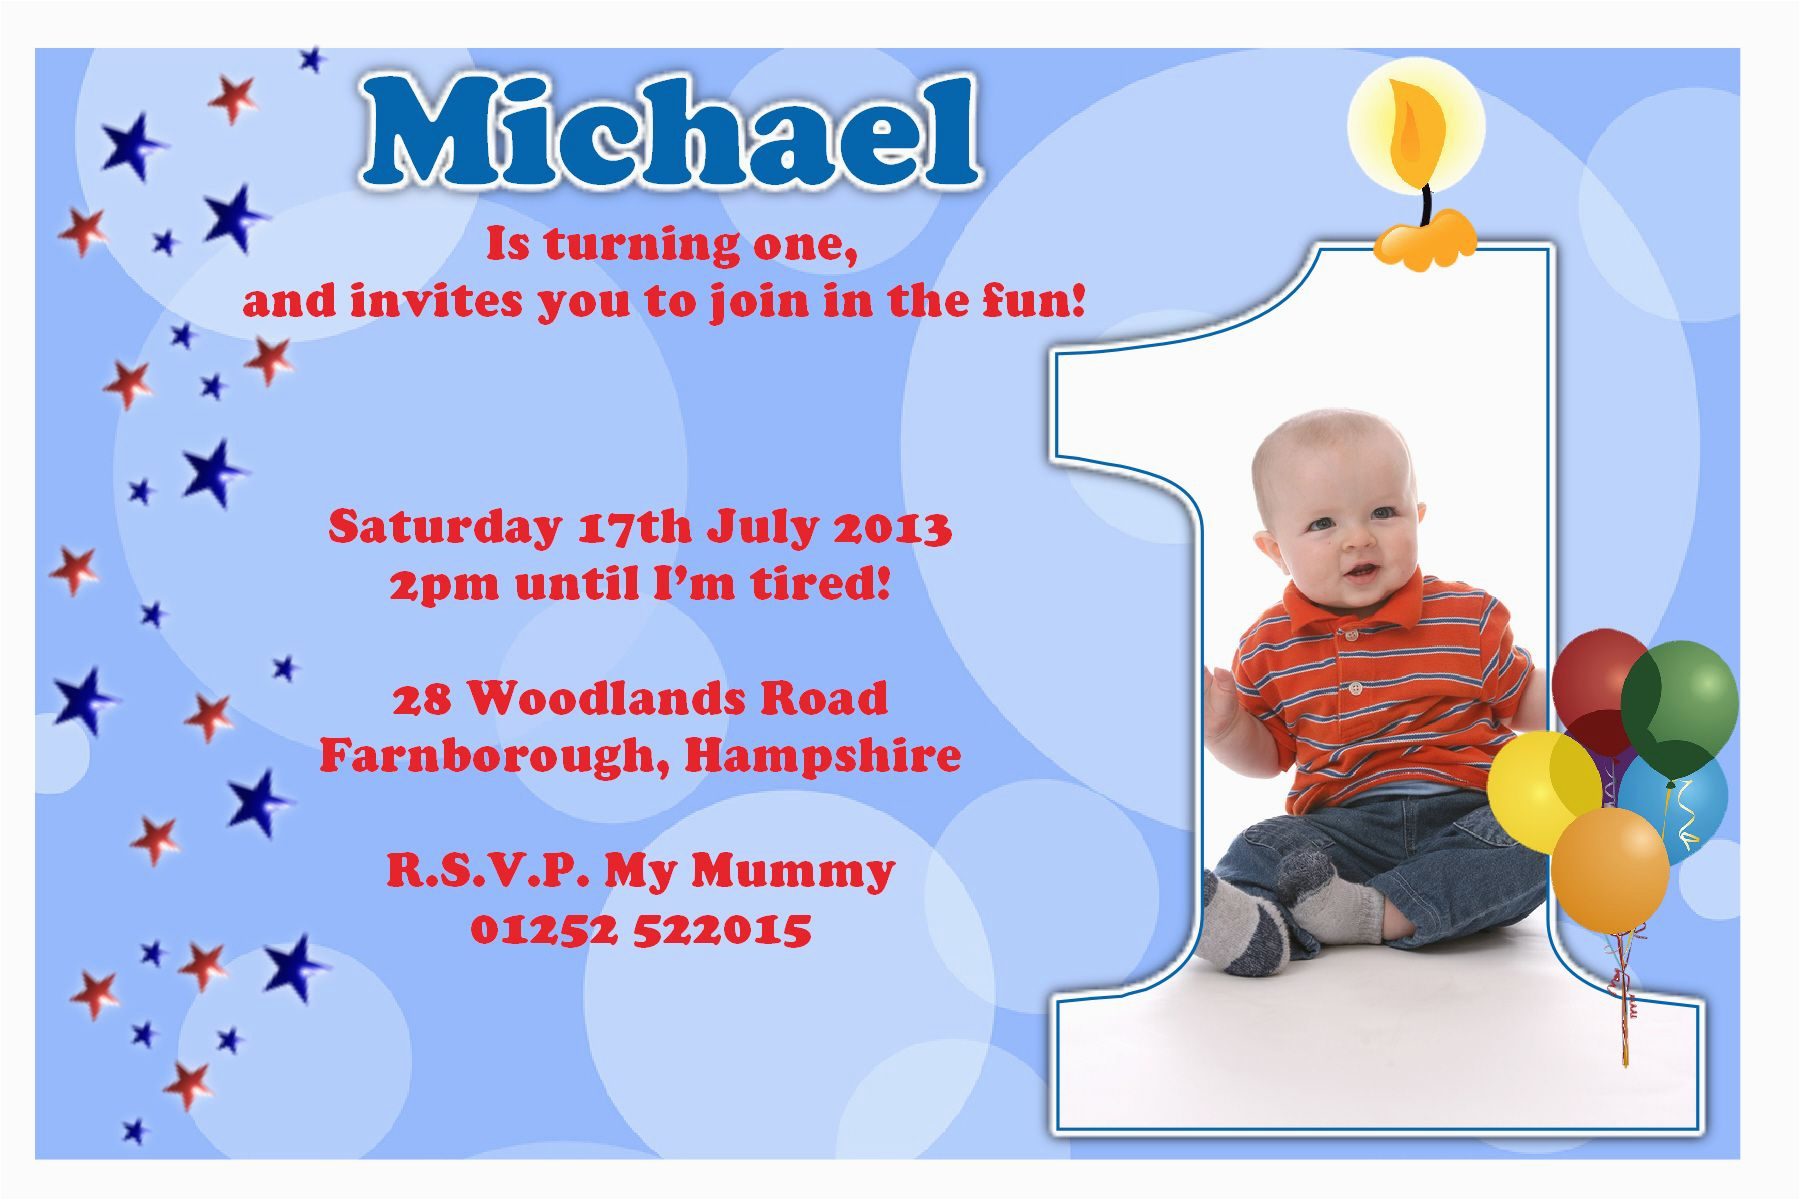 e-invitation-for-baby-birthday-first-birthday-party-invitation-ideas